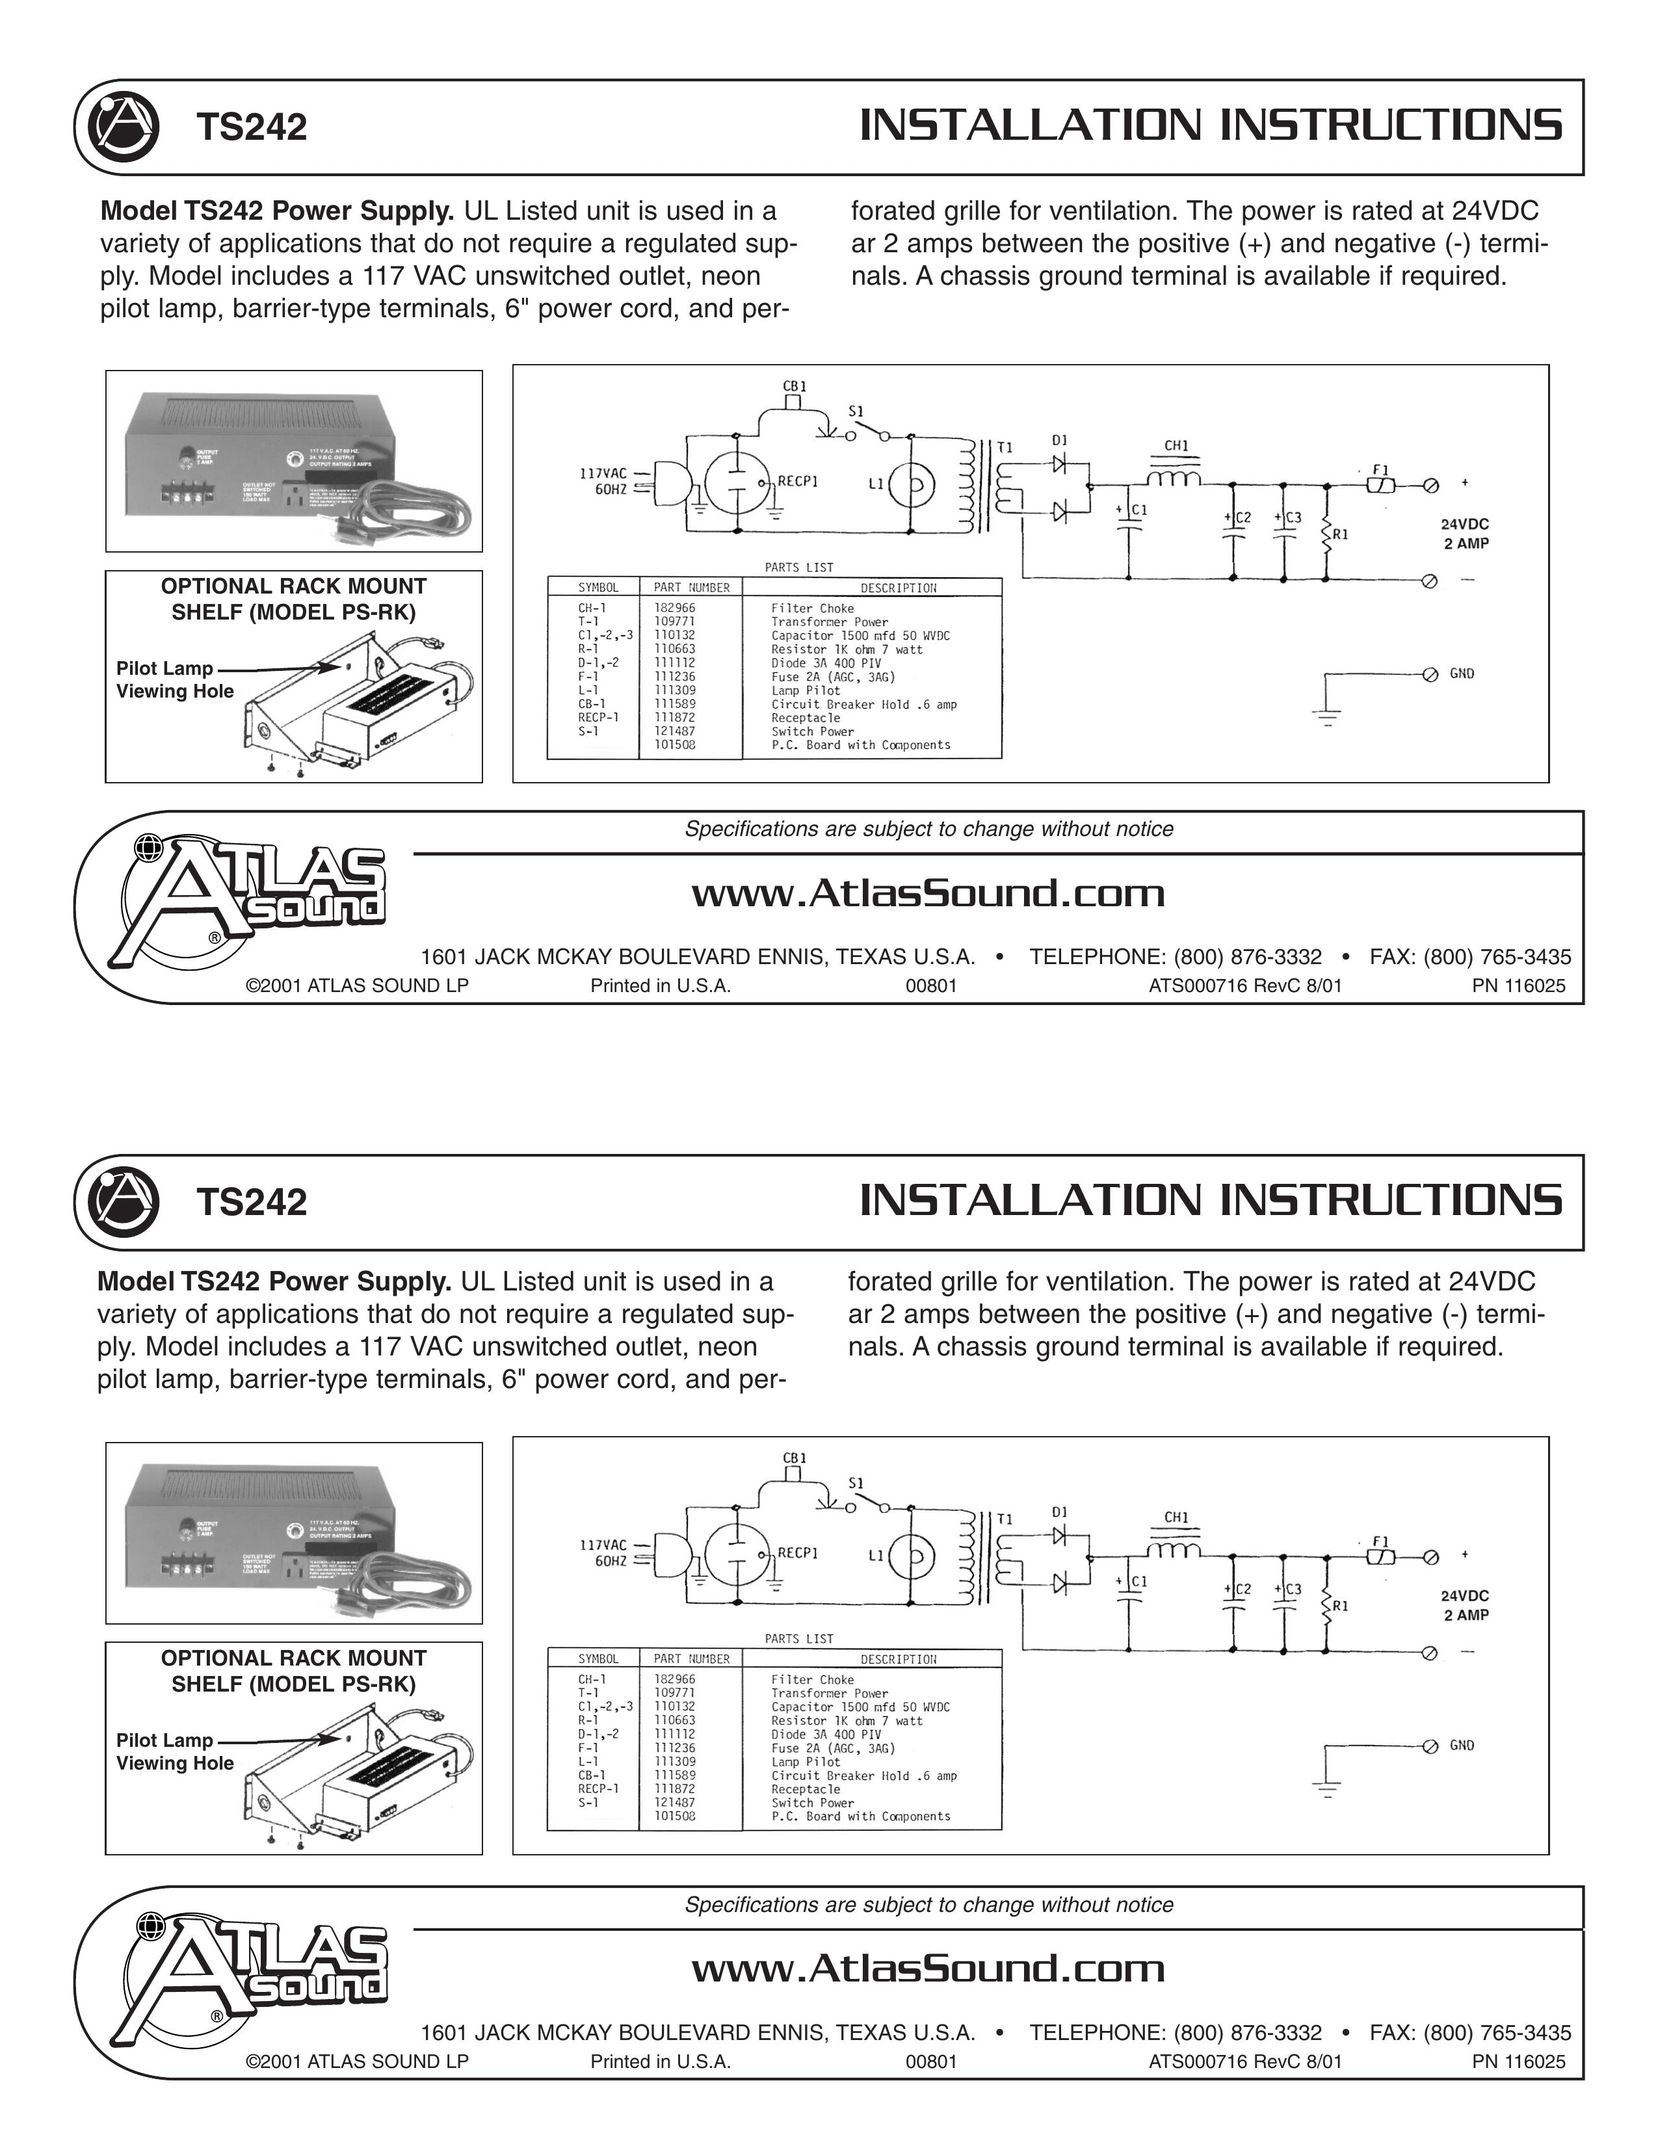 Atlas Sound TS242 Power Supply User Manual